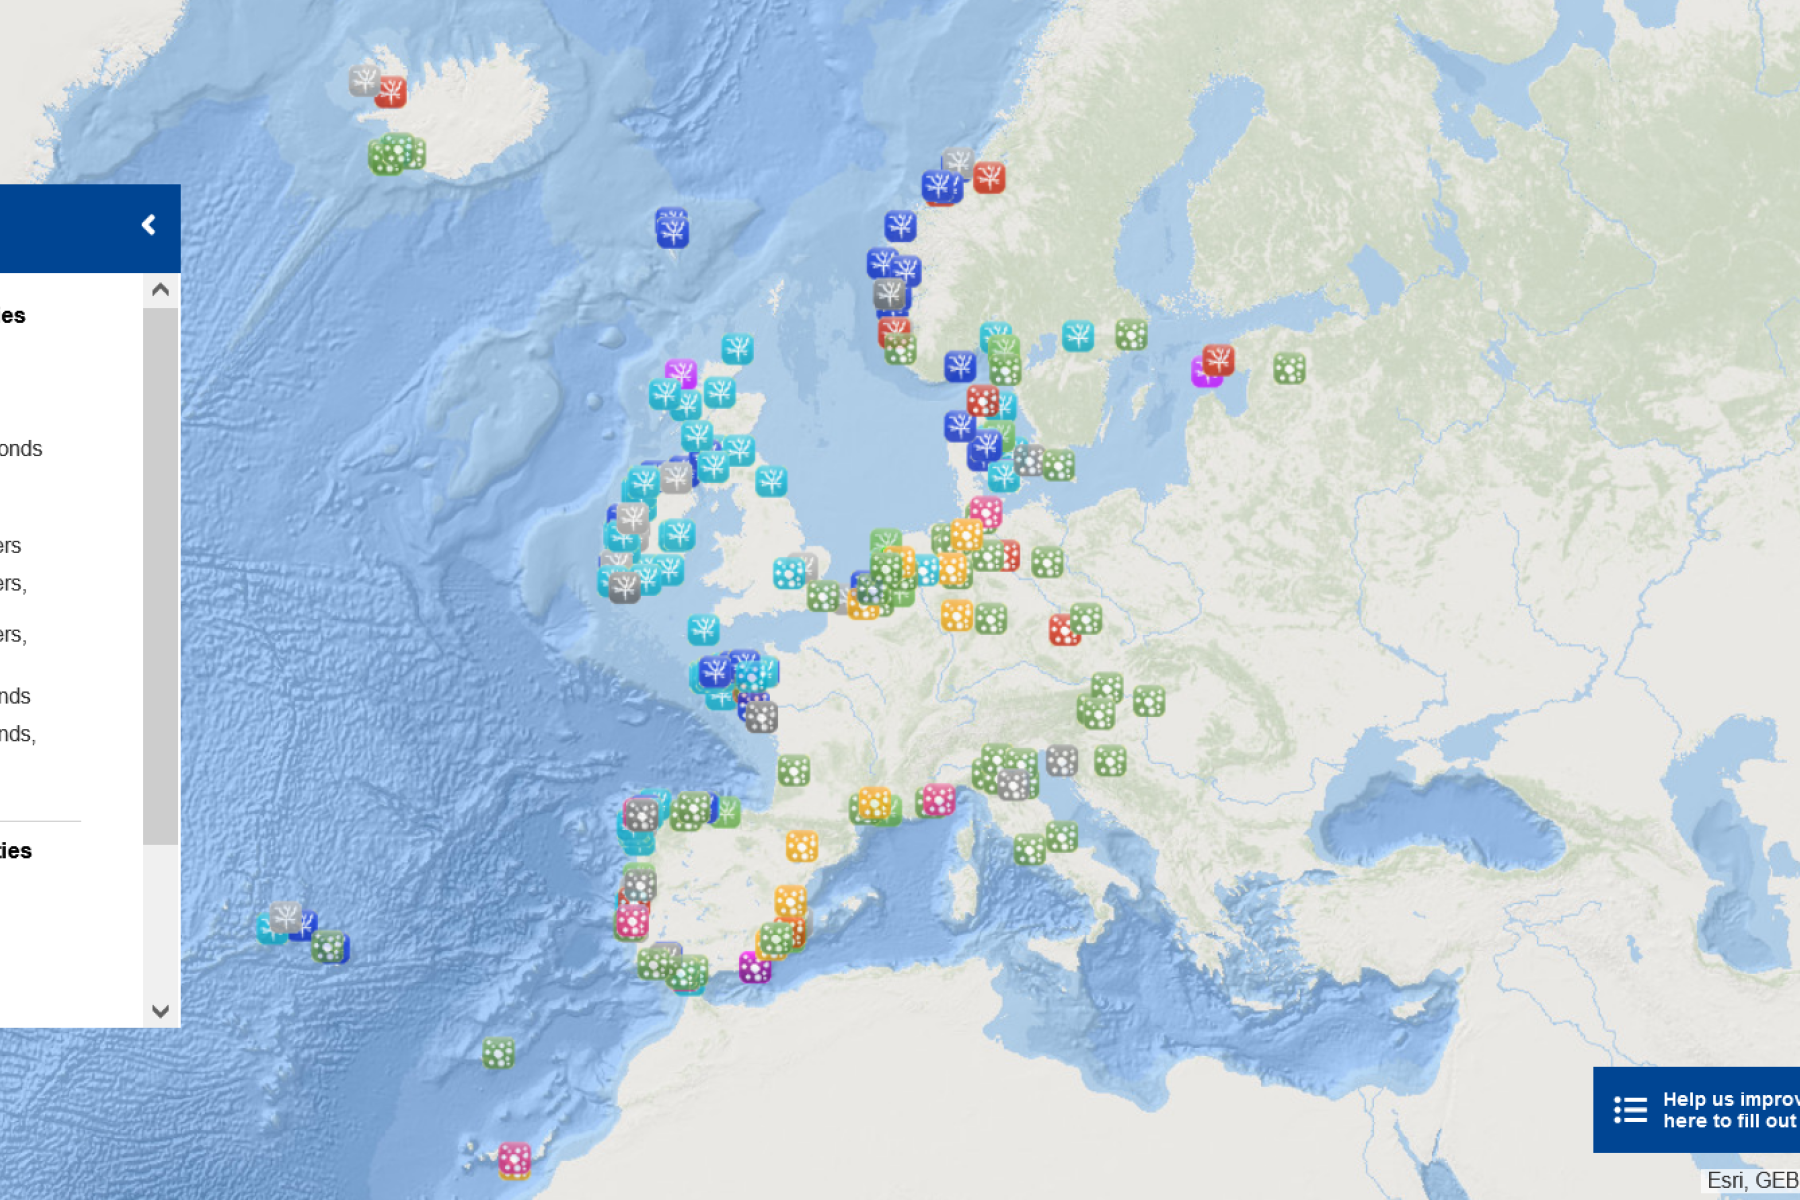 This map shows macroalgae and microalgae producing facilities across Europe.